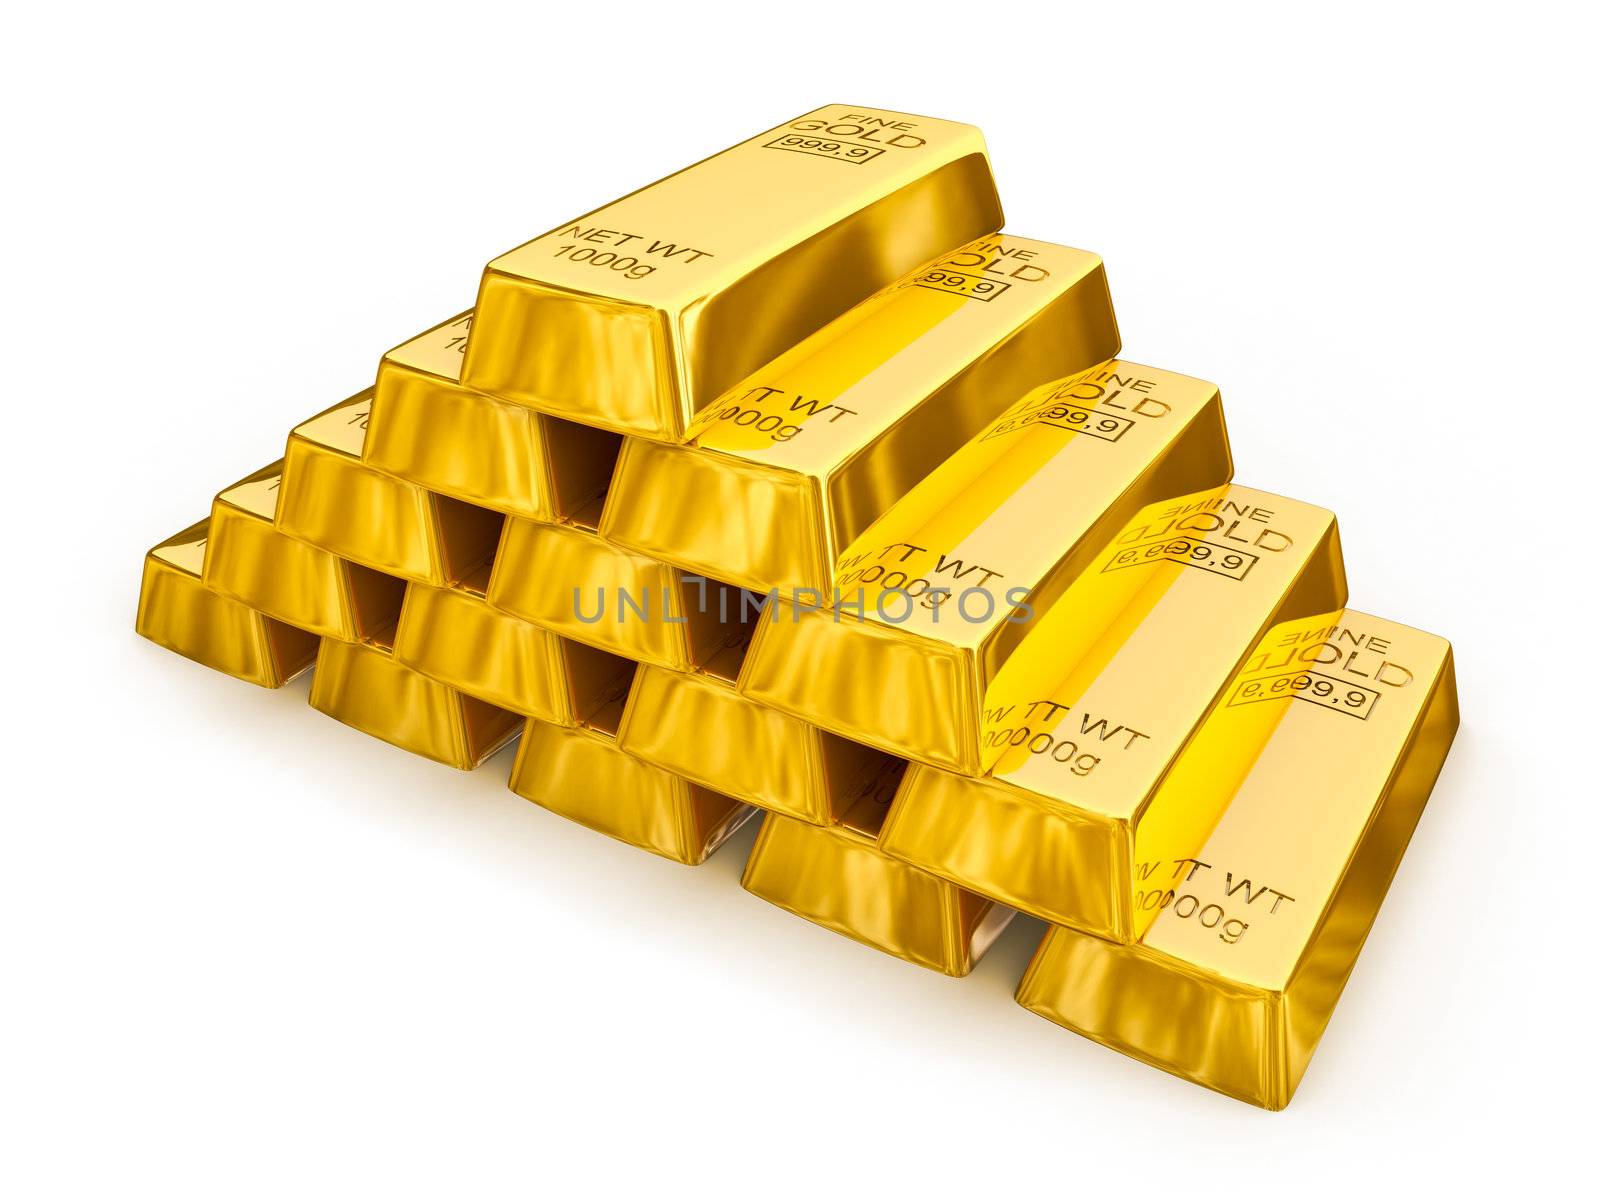 Gold bars pyramid by dimol